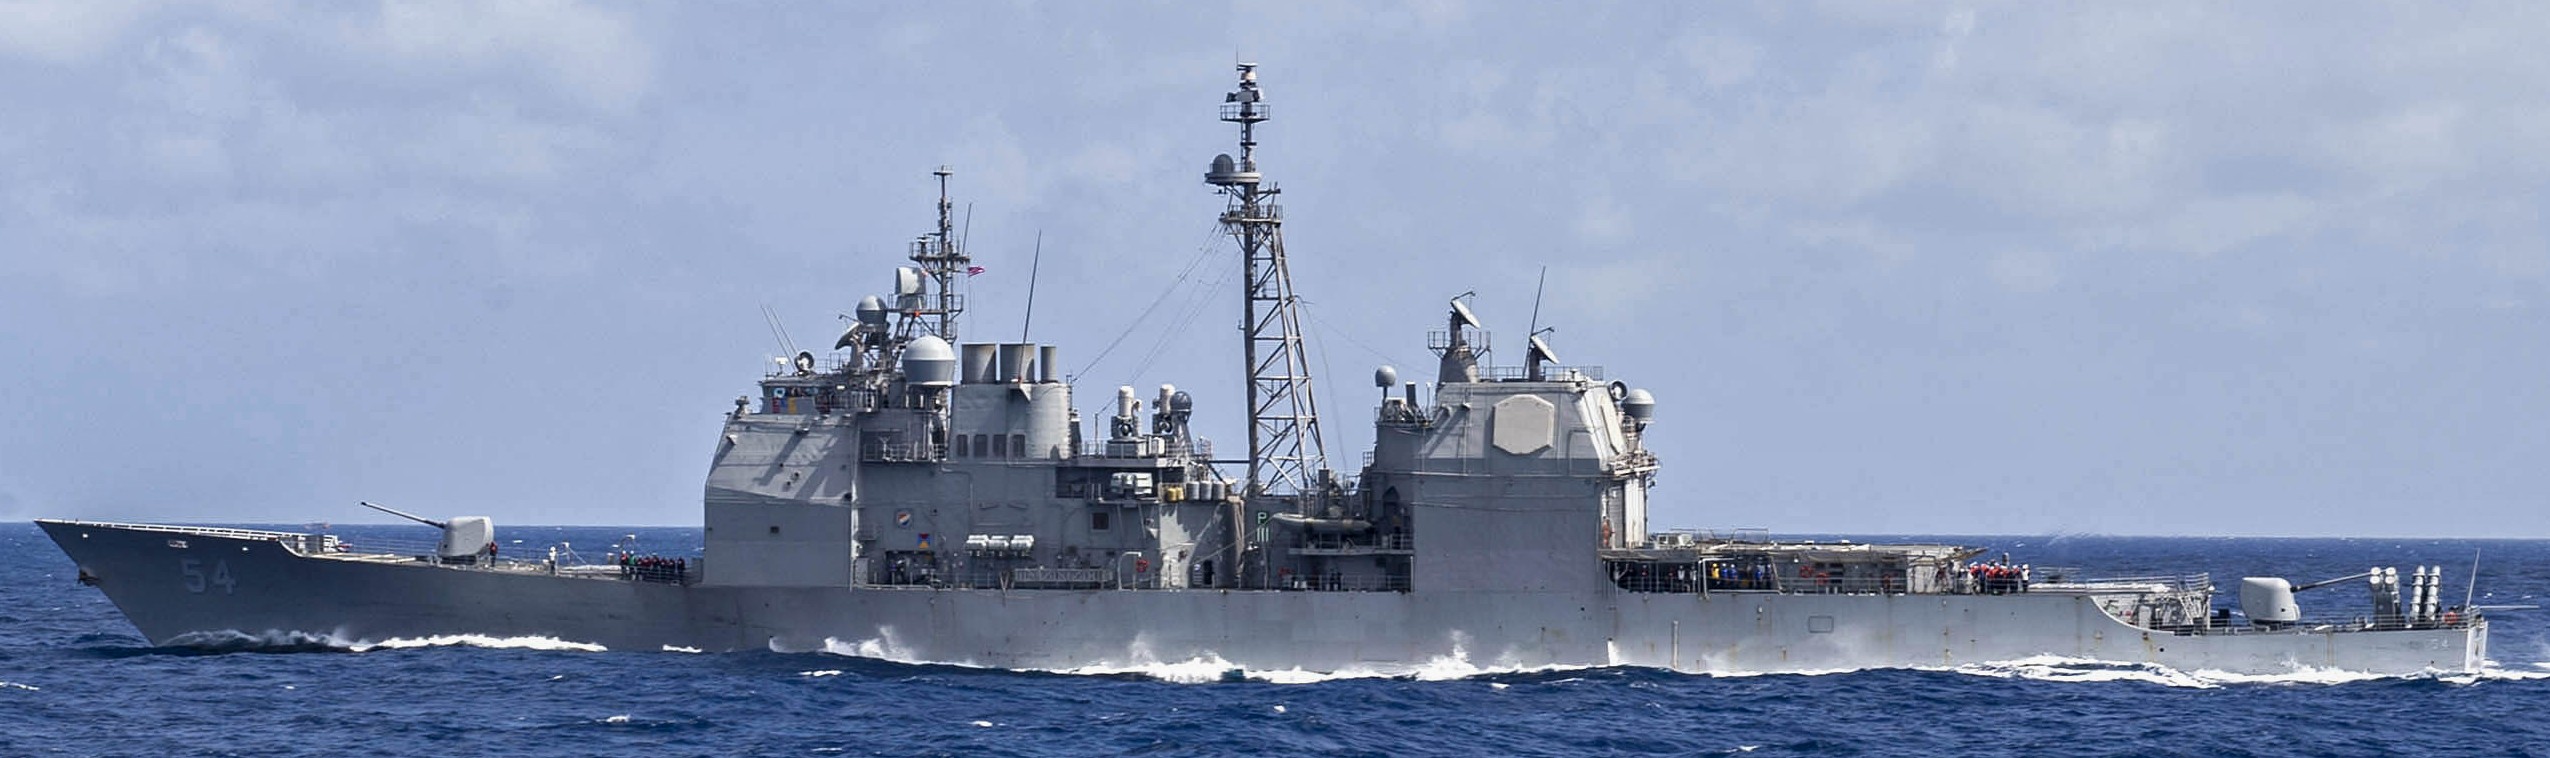 cg-54 uss antietam ticonderoga class guided missile cruiser aegis us navy south china sea 54